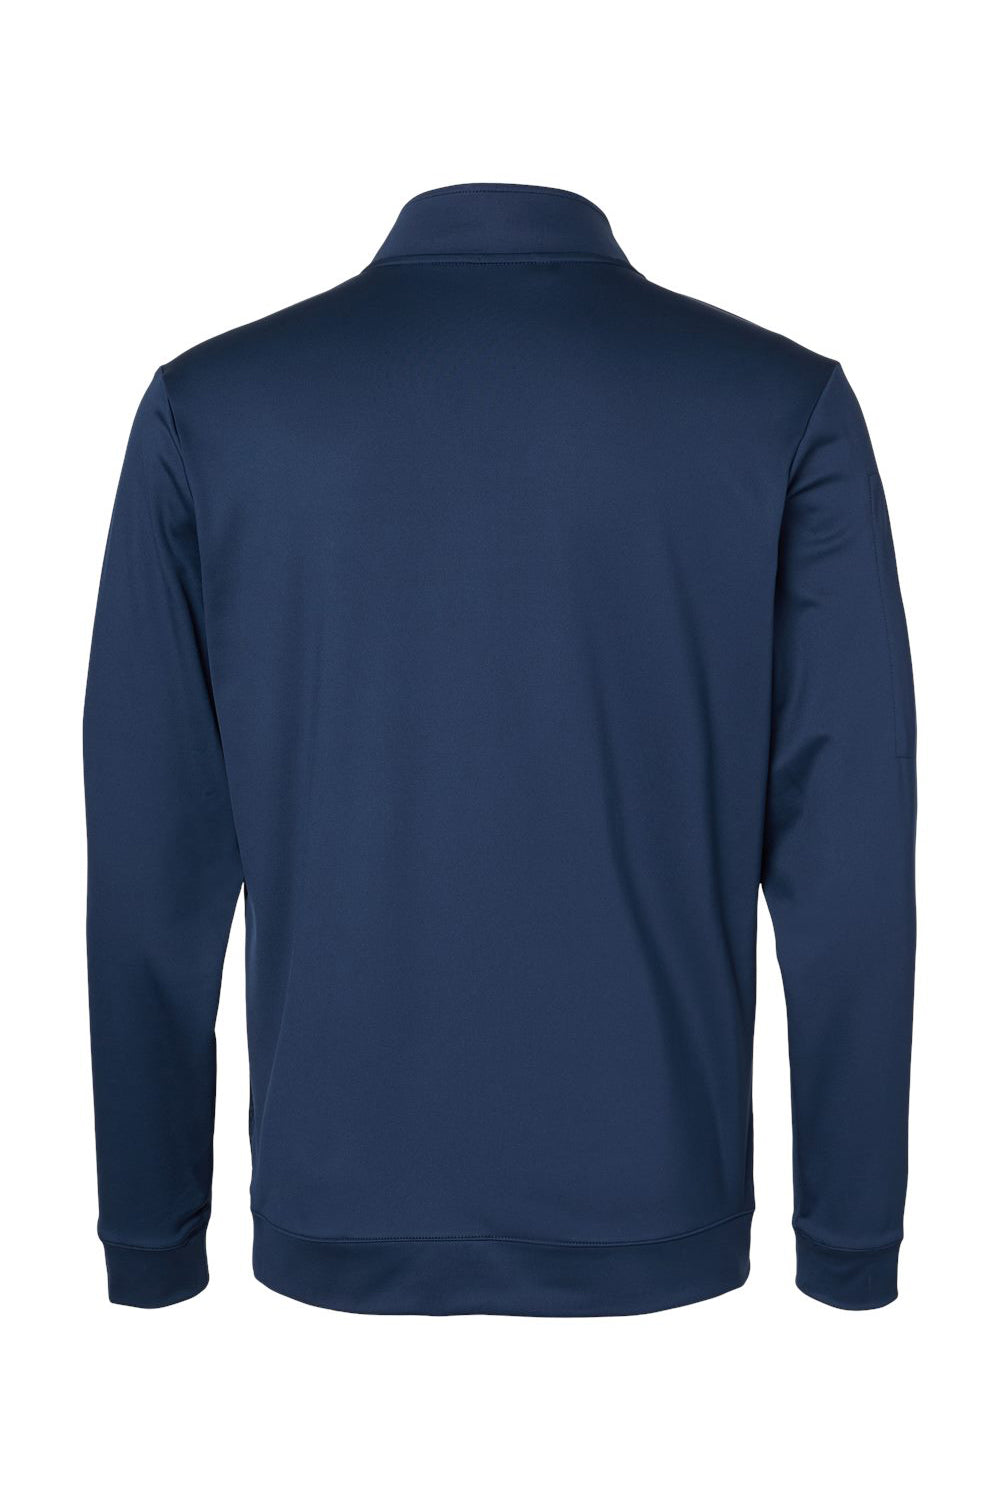 Adidas A295 Mens Performance UPF 50+ 1/4 Zip Sweatshirt Collegiate Navy Blue Flat Back